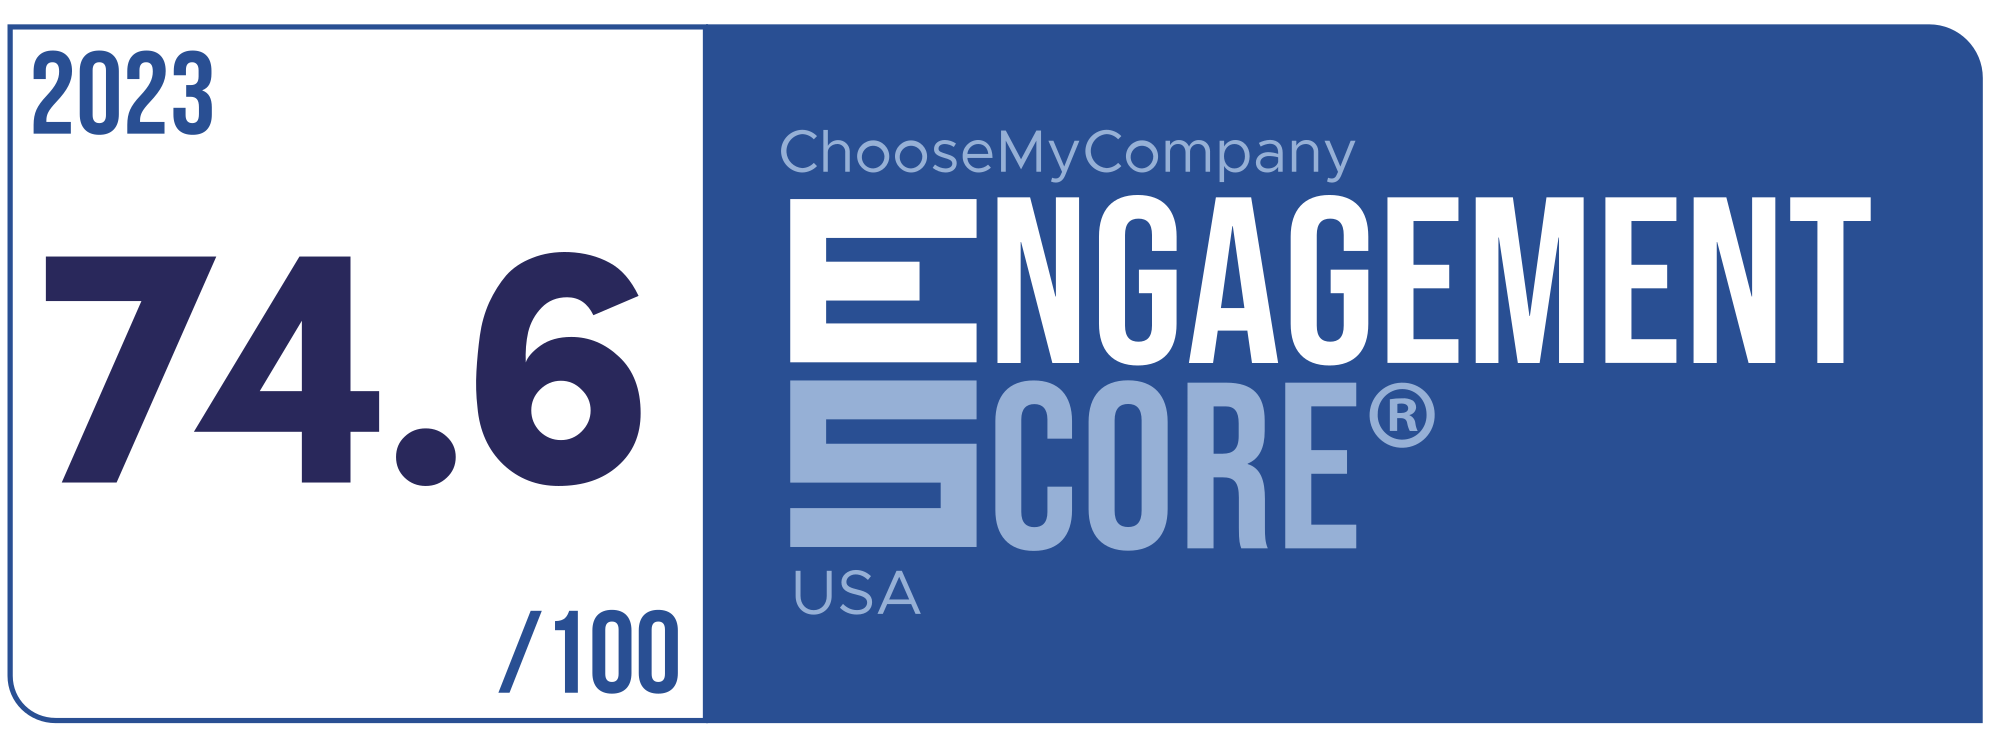 Label Engagement Score 2023 USA